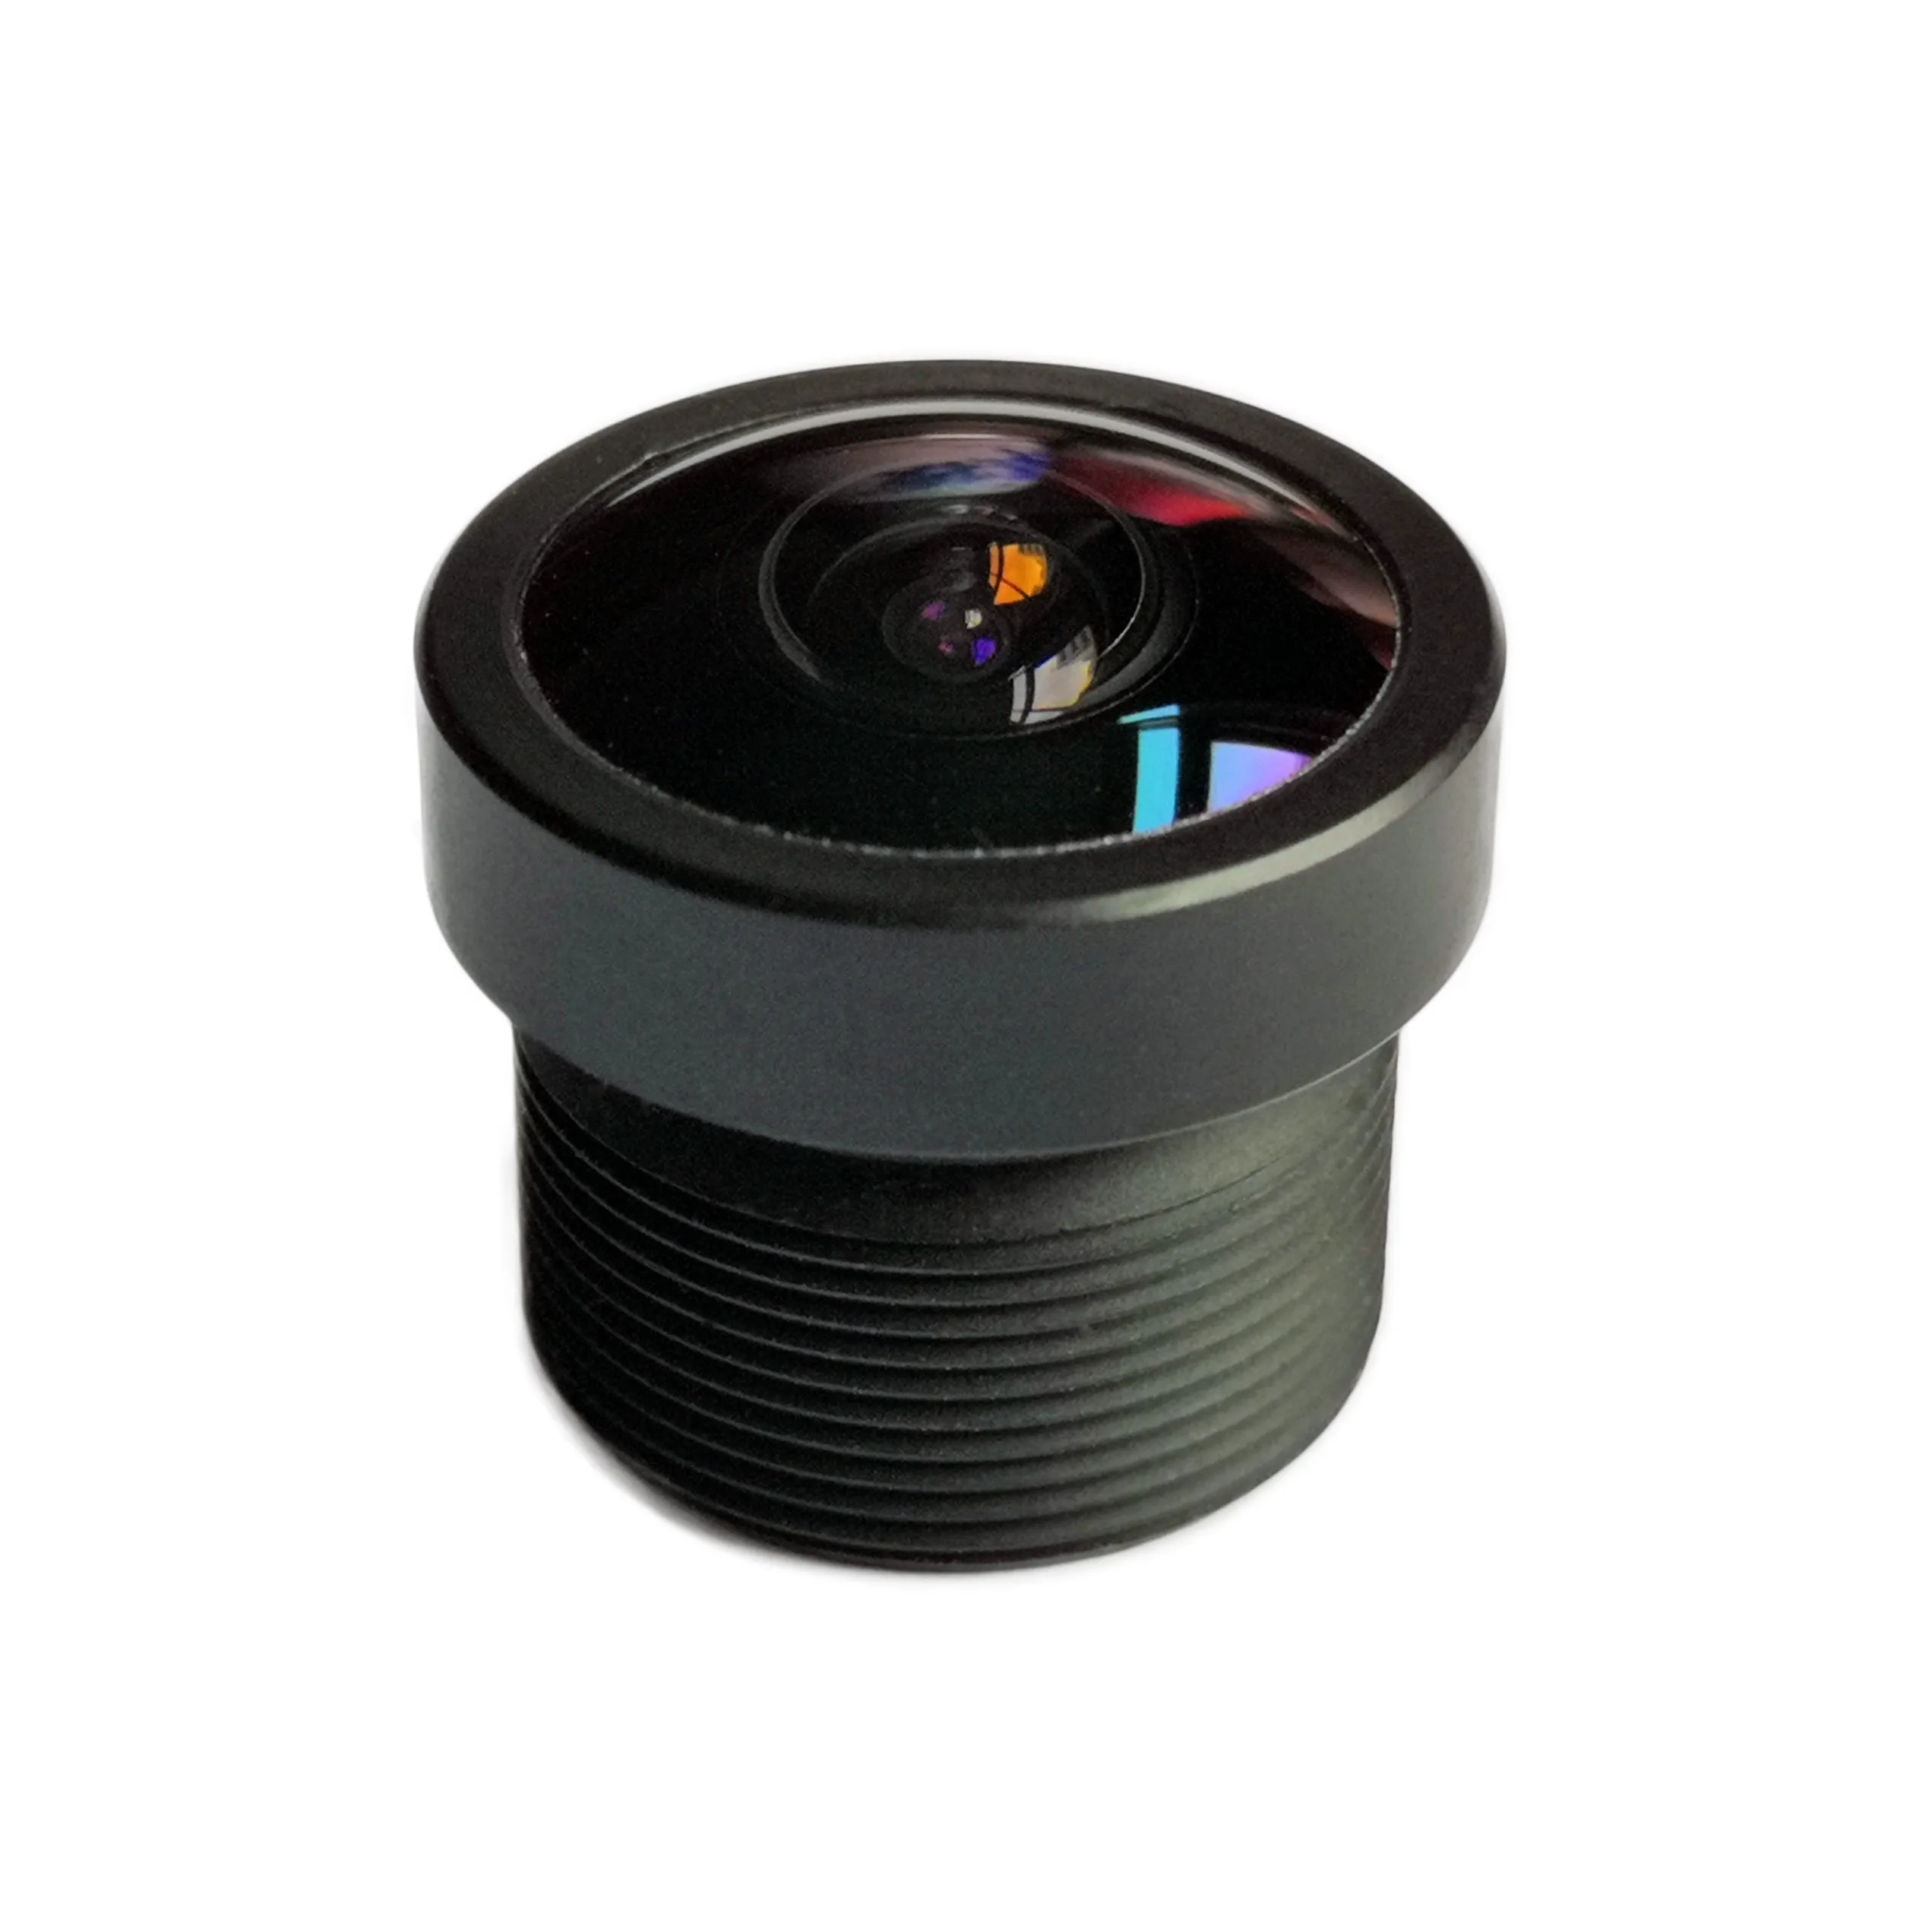 OKSee 1/4 panoramik lens FOV 200 süper geniş açı lens M12 cctv lens